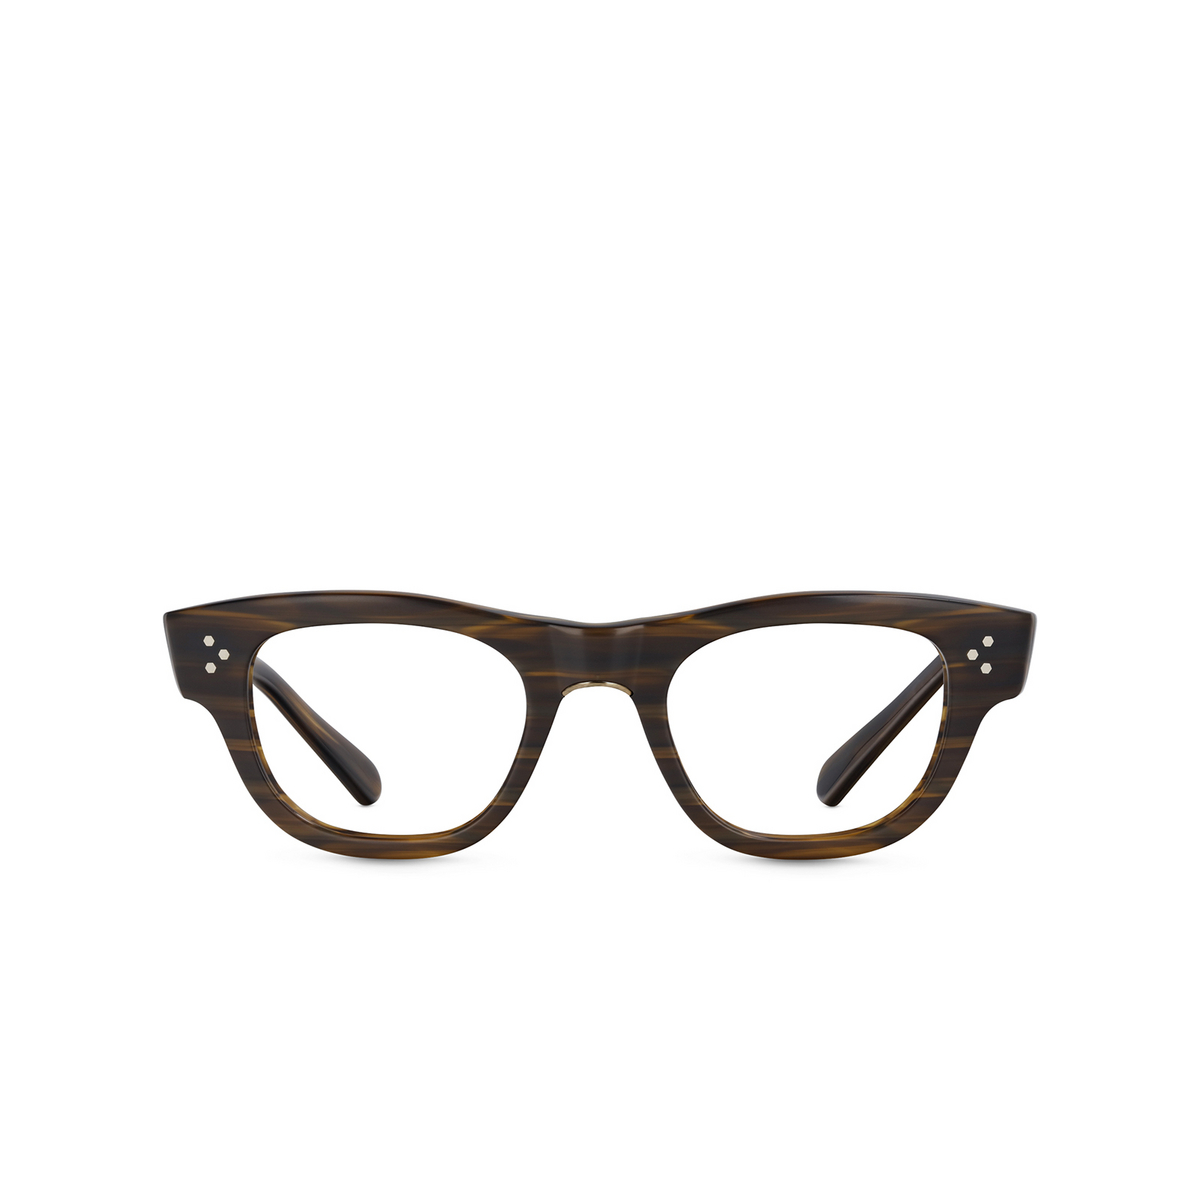 Mr. Leight WAIMEA C Eyeglasses MDRFTWD-ATG Matte Driftwood-Antique Gold - front view